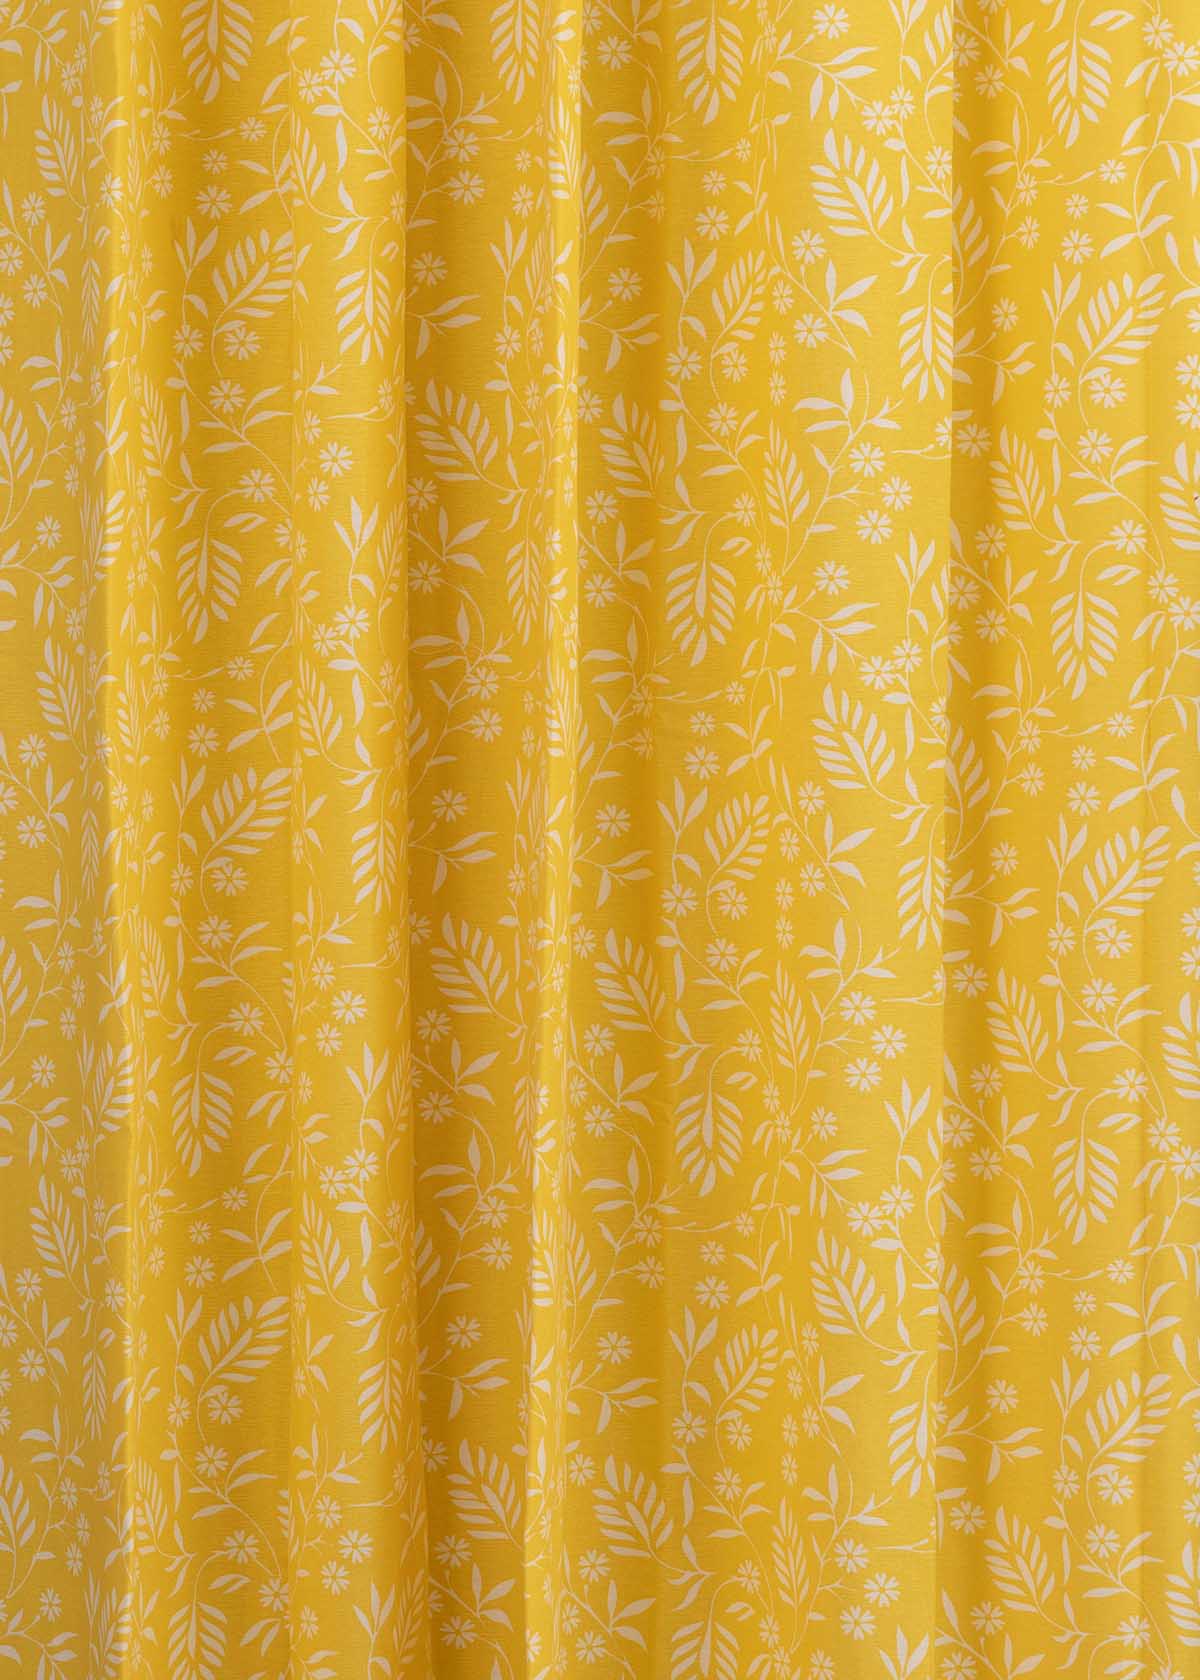 Yellow Daisy printed cotton Fabric - Yellow